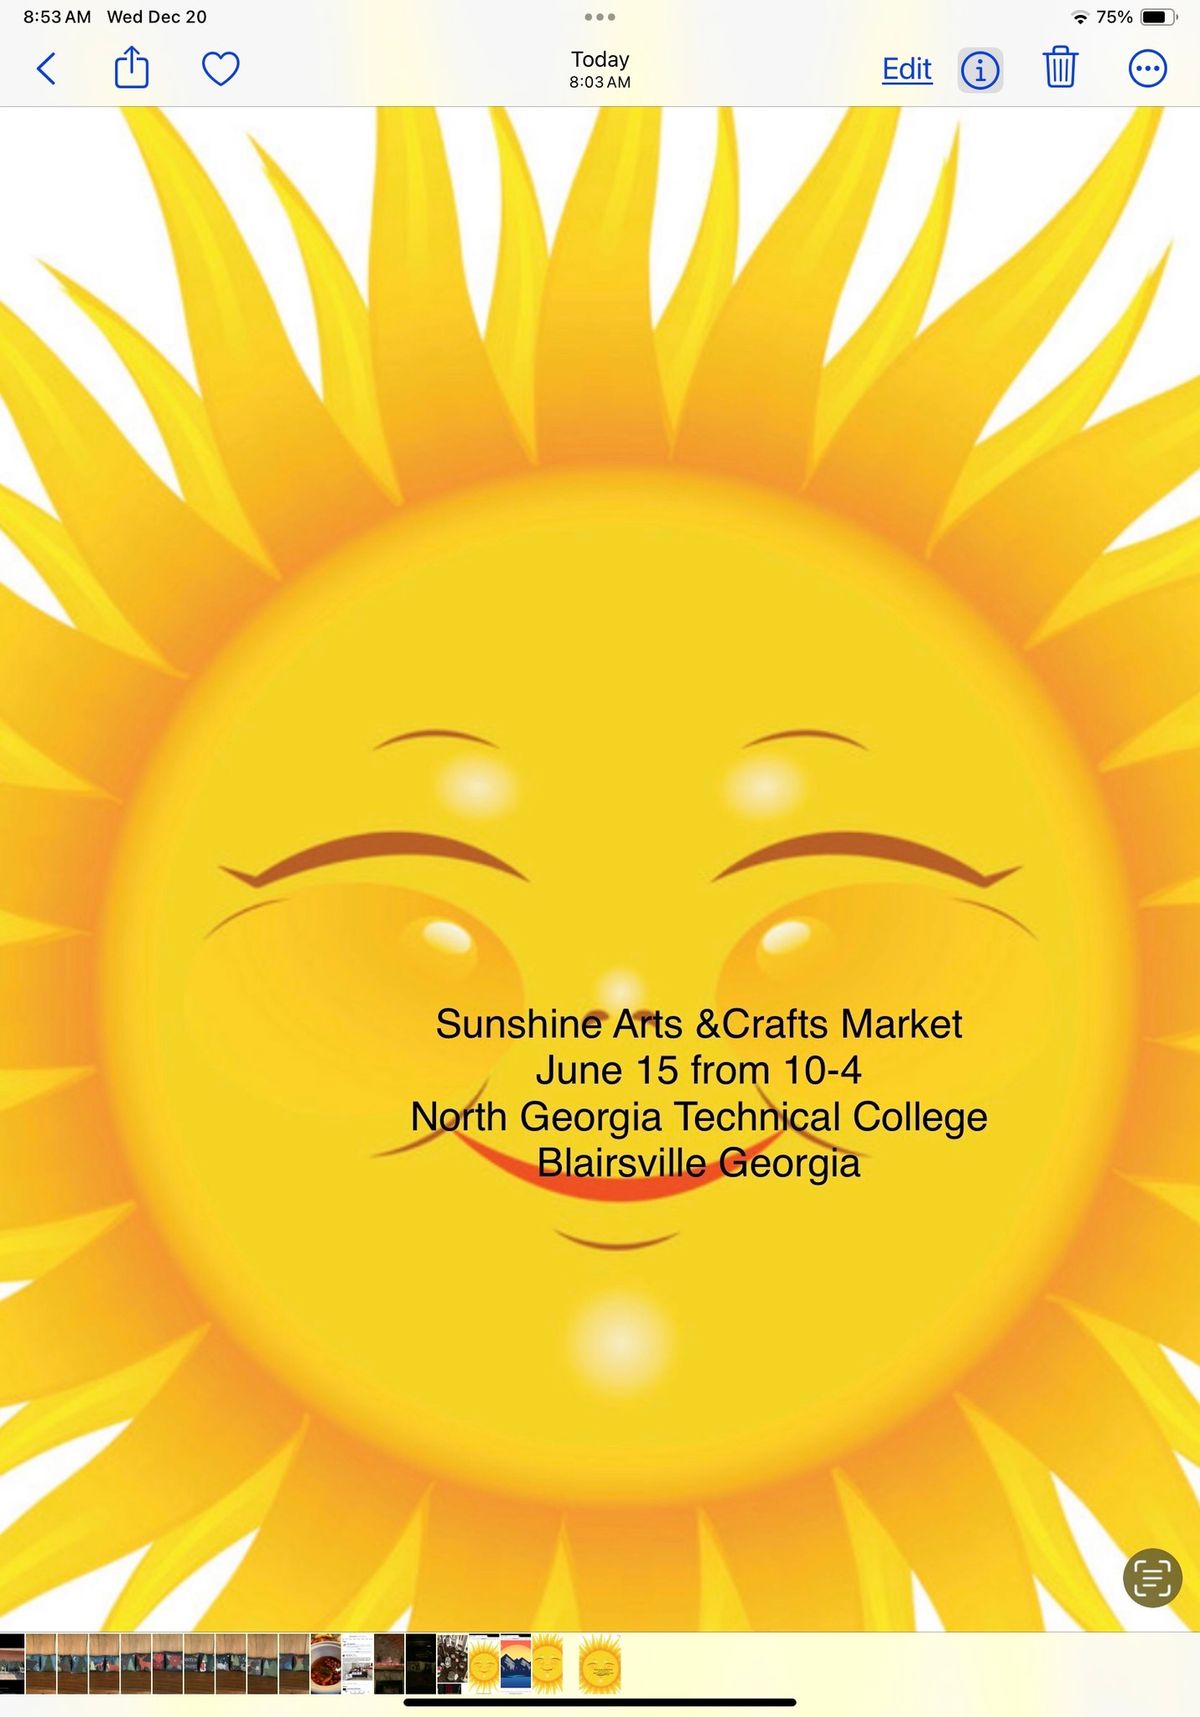 The Sunshine Arts& Crafts Market